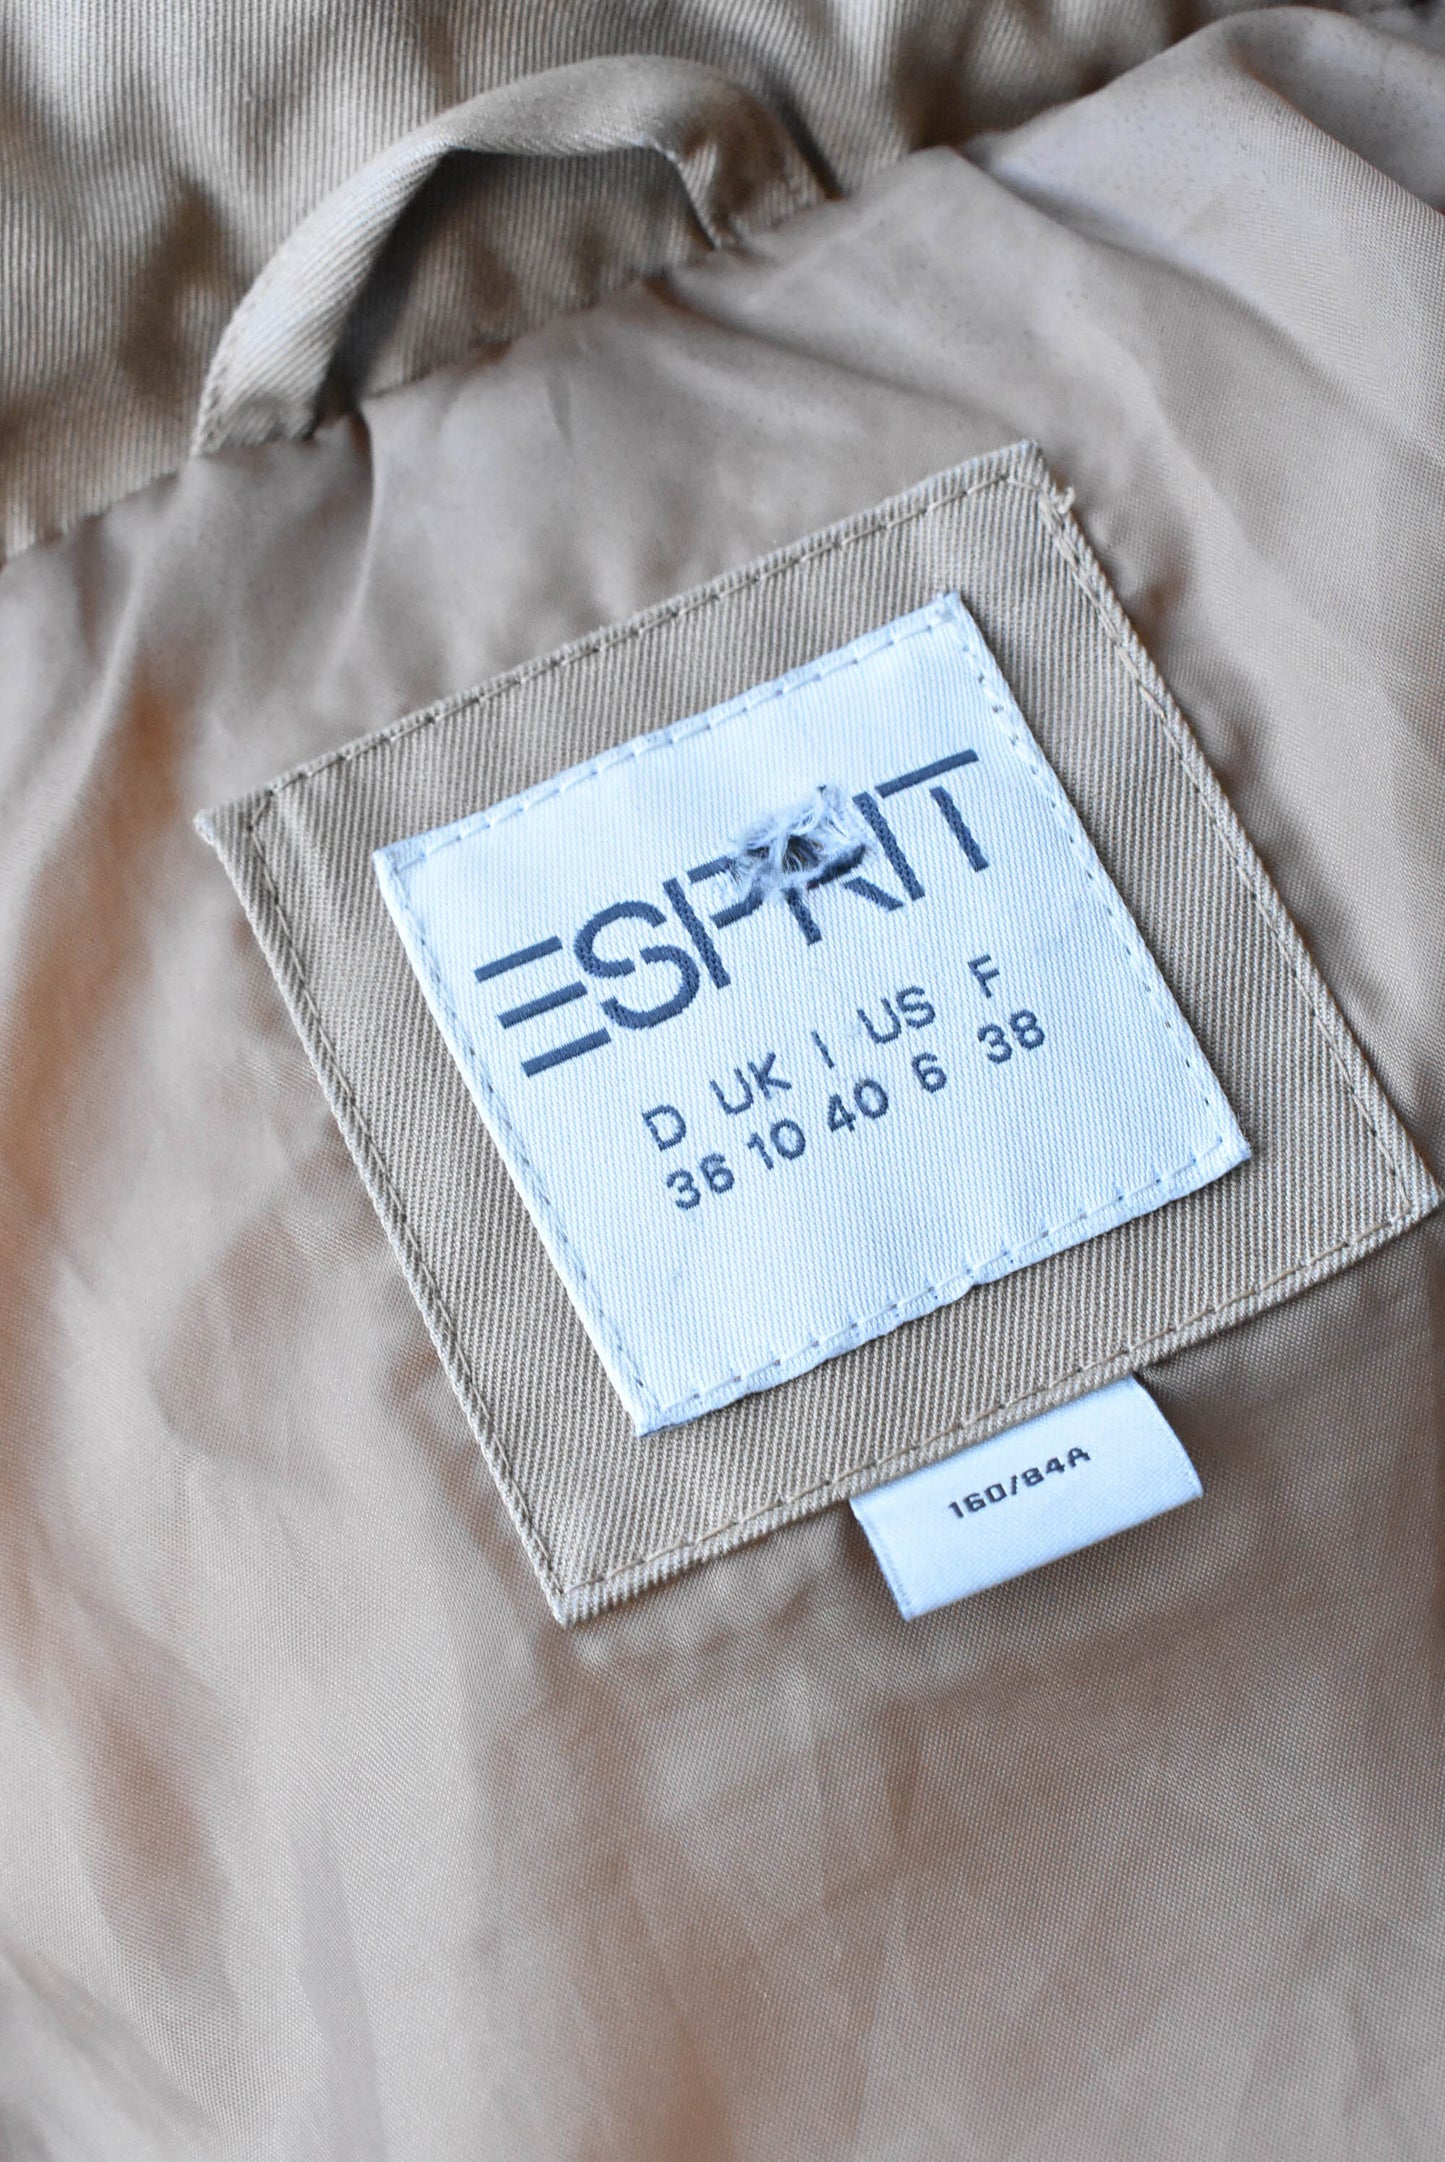 Esprit padded Coat size 10